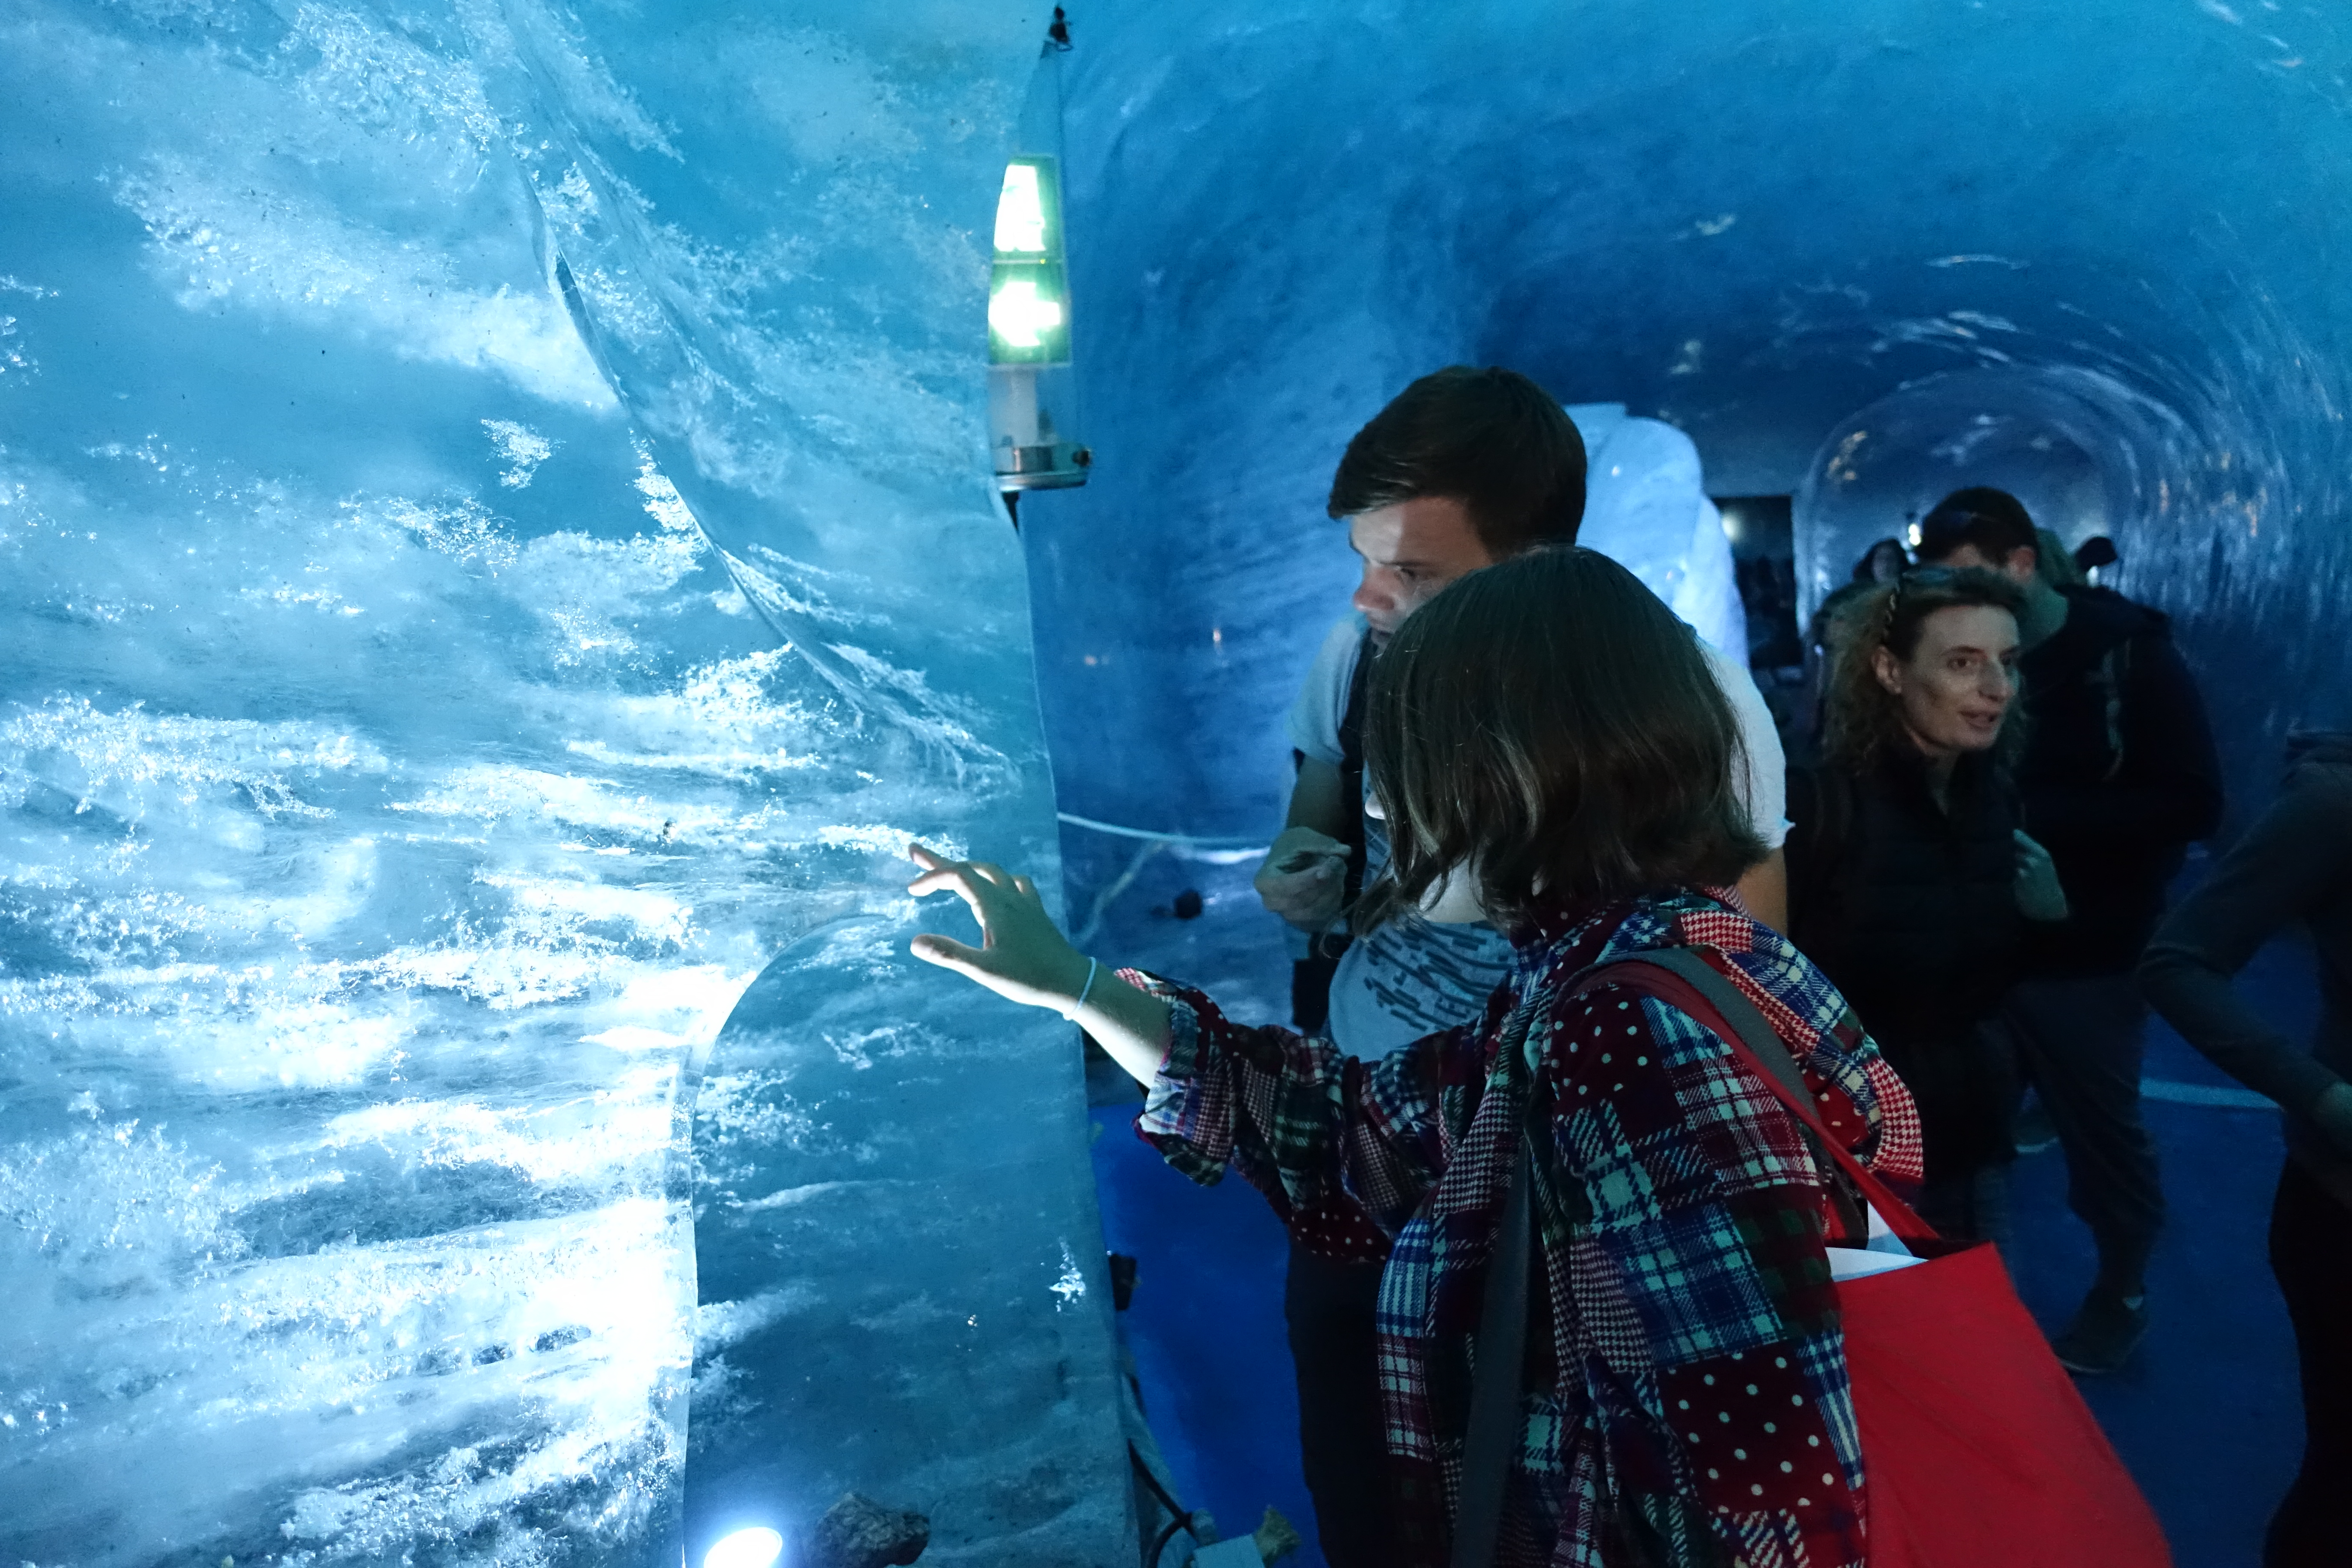 inside the glacier